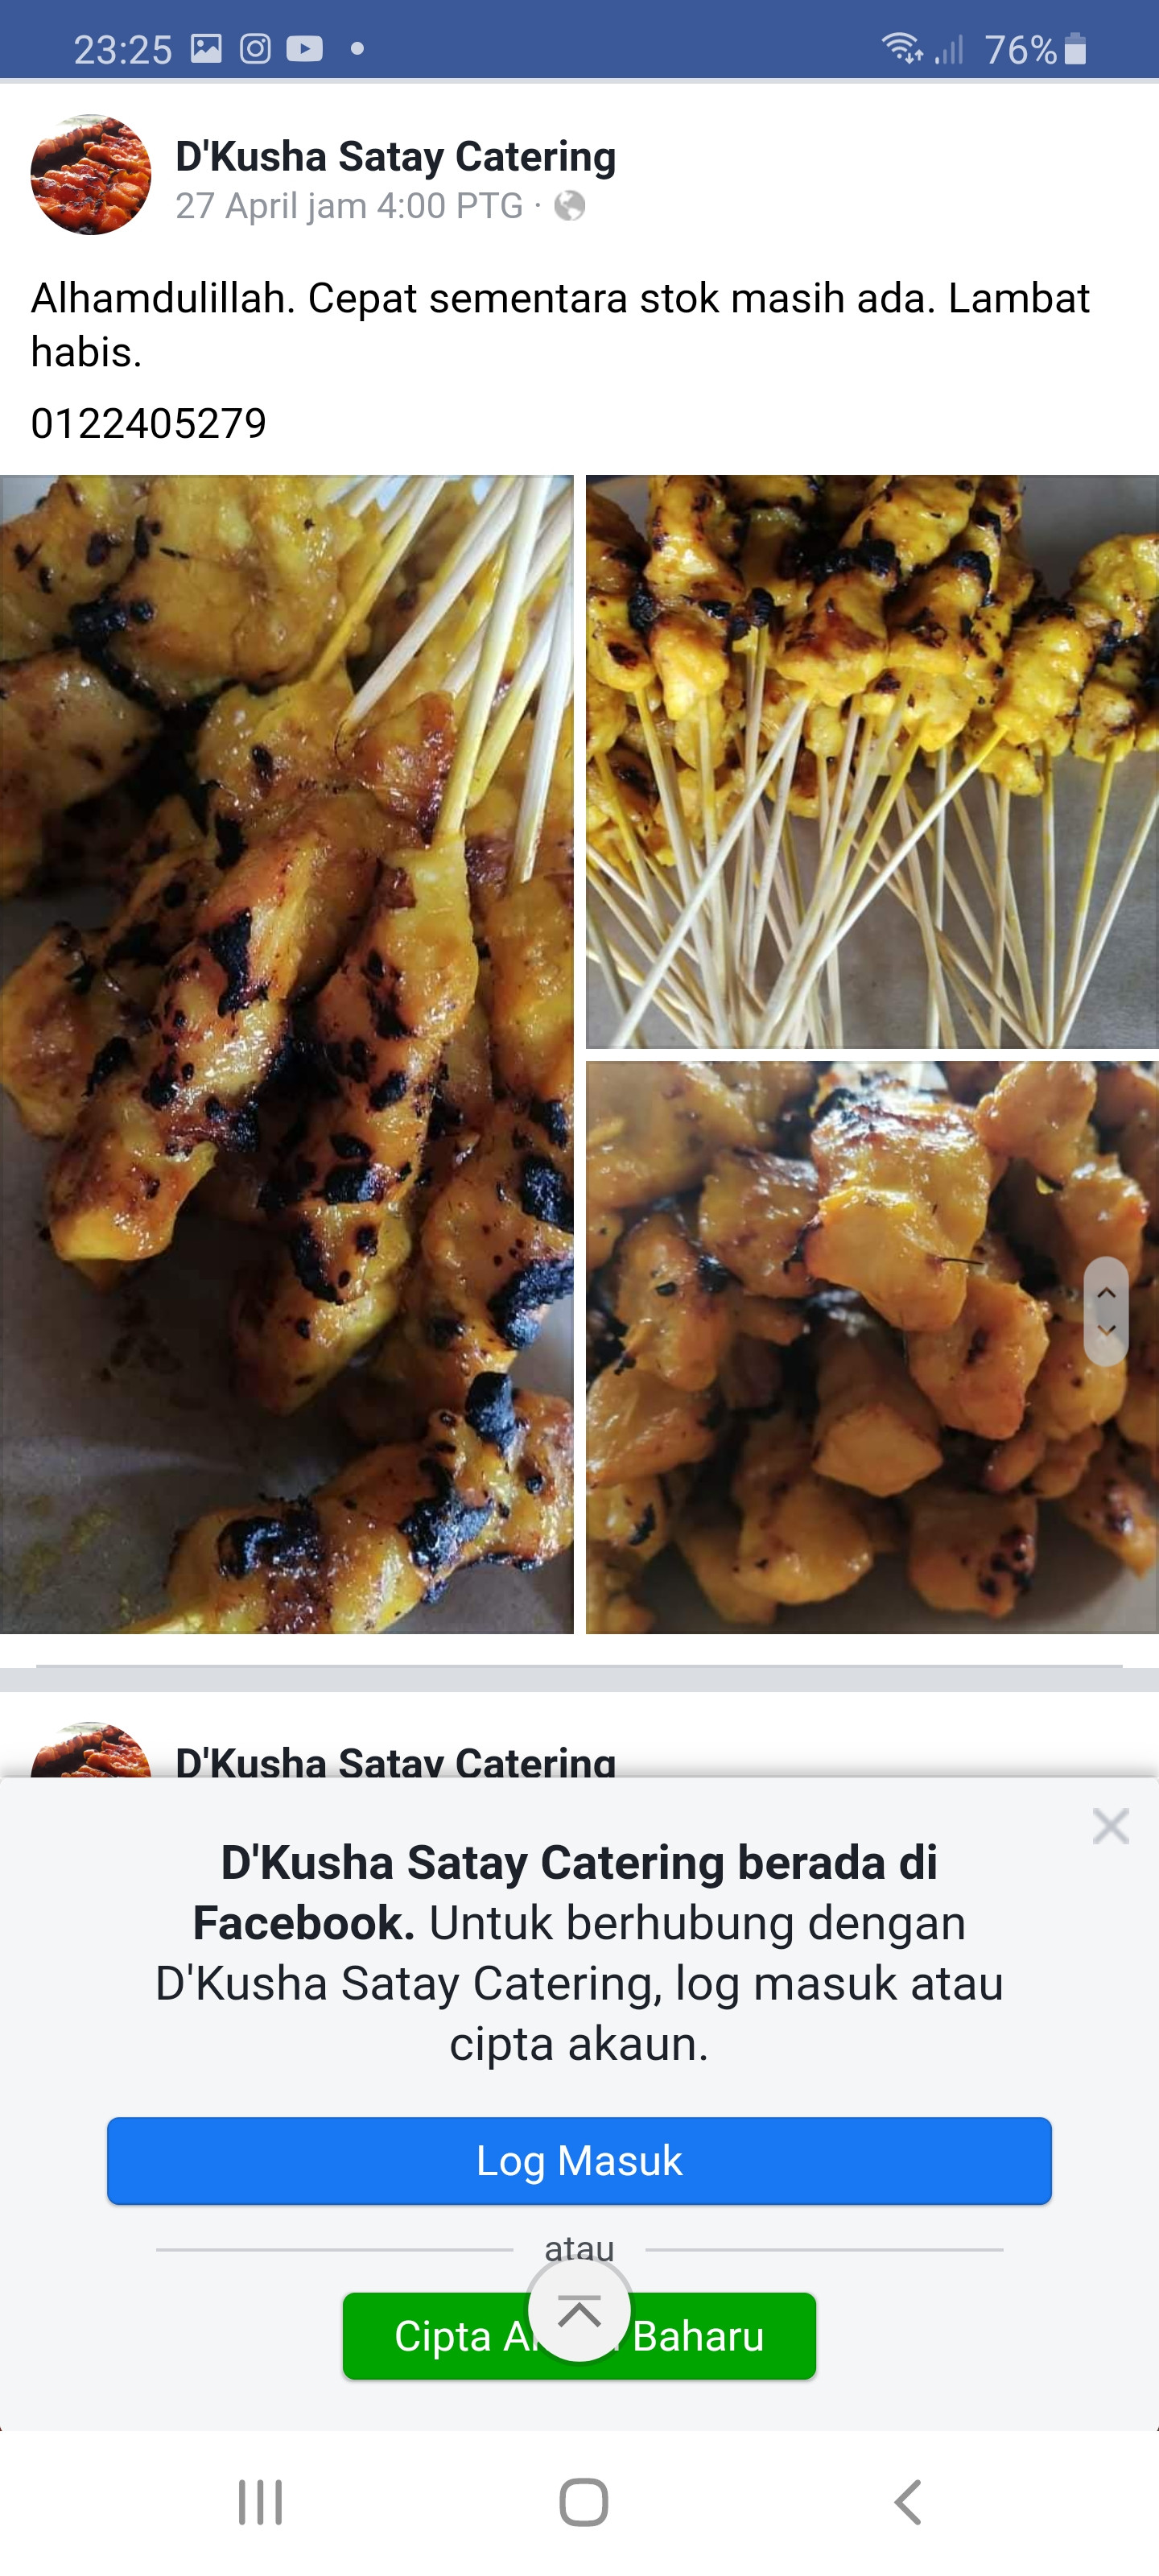 d'Kusha Satay Catering